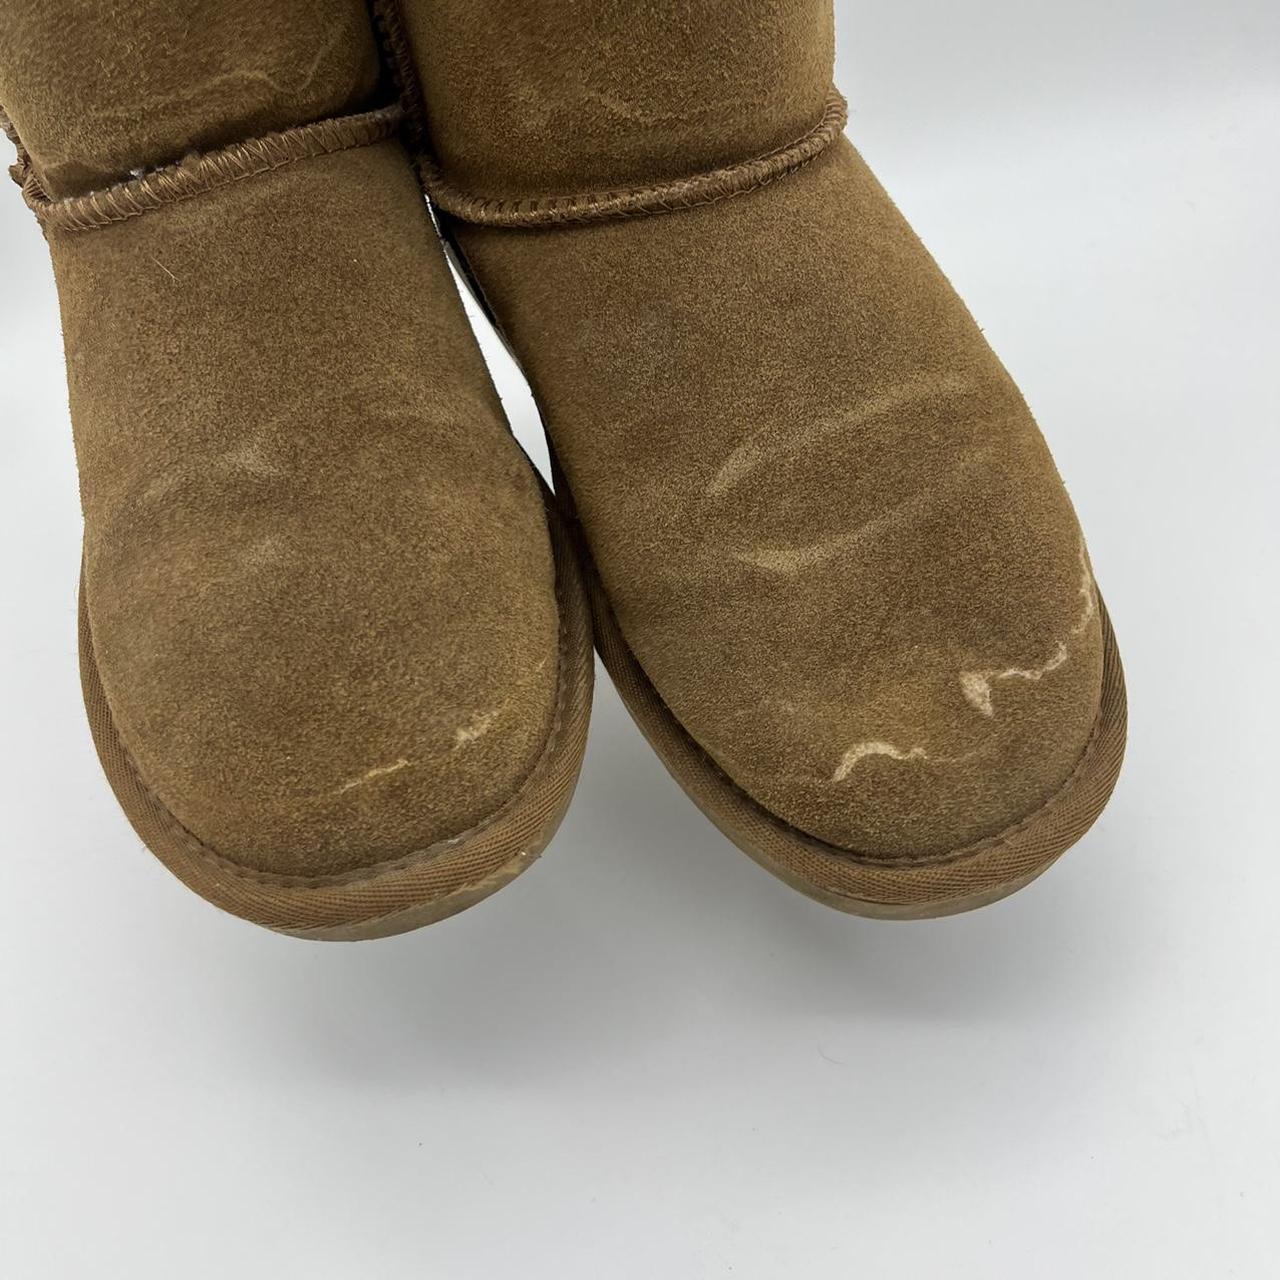 Product Image 3 - Minnetonka Cream Boots

•Minnetonka Tan Fur